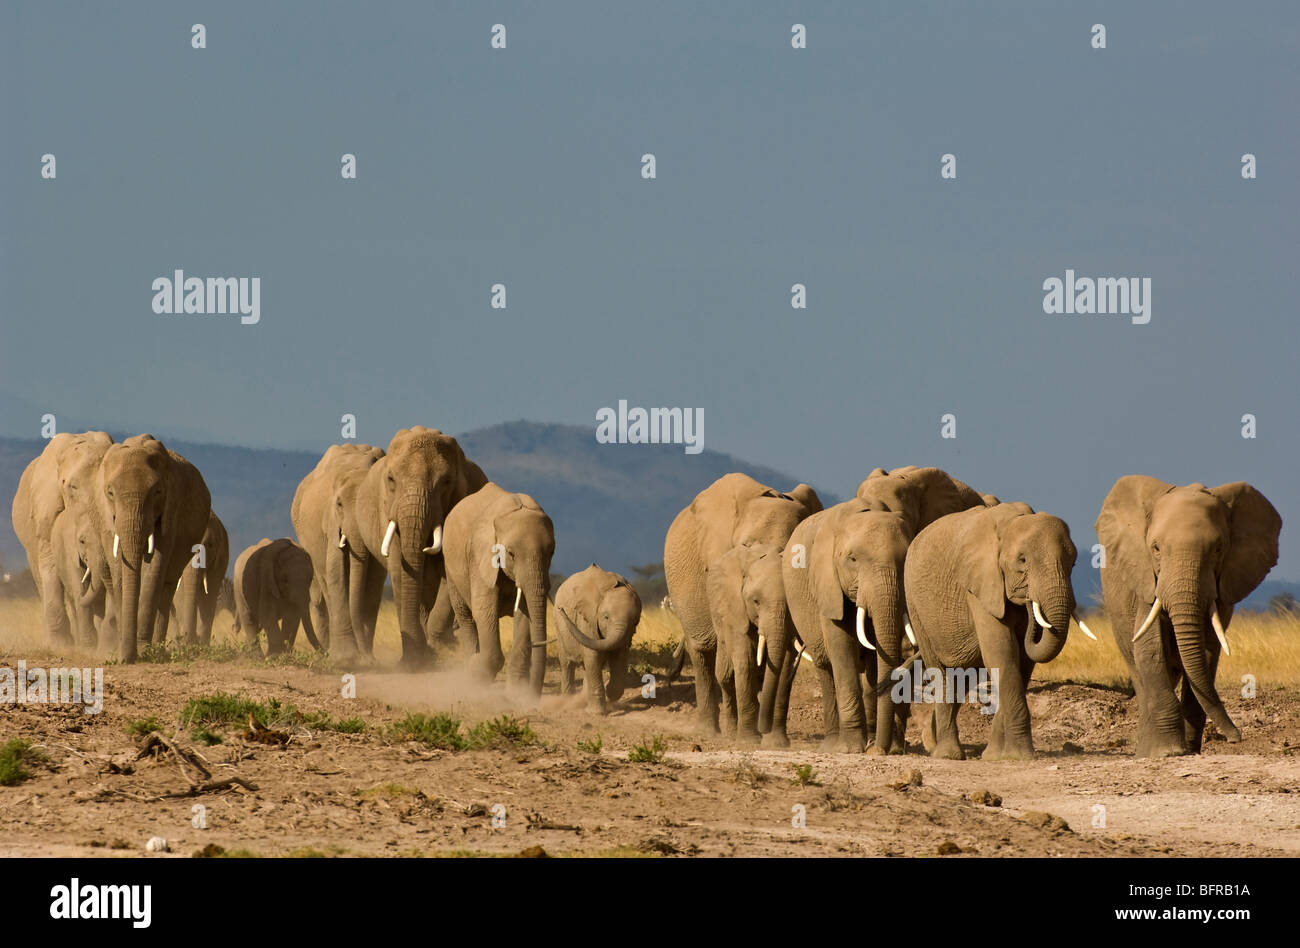 Elefantenherde zu Fuß in Richtung Kamera Stockfoto